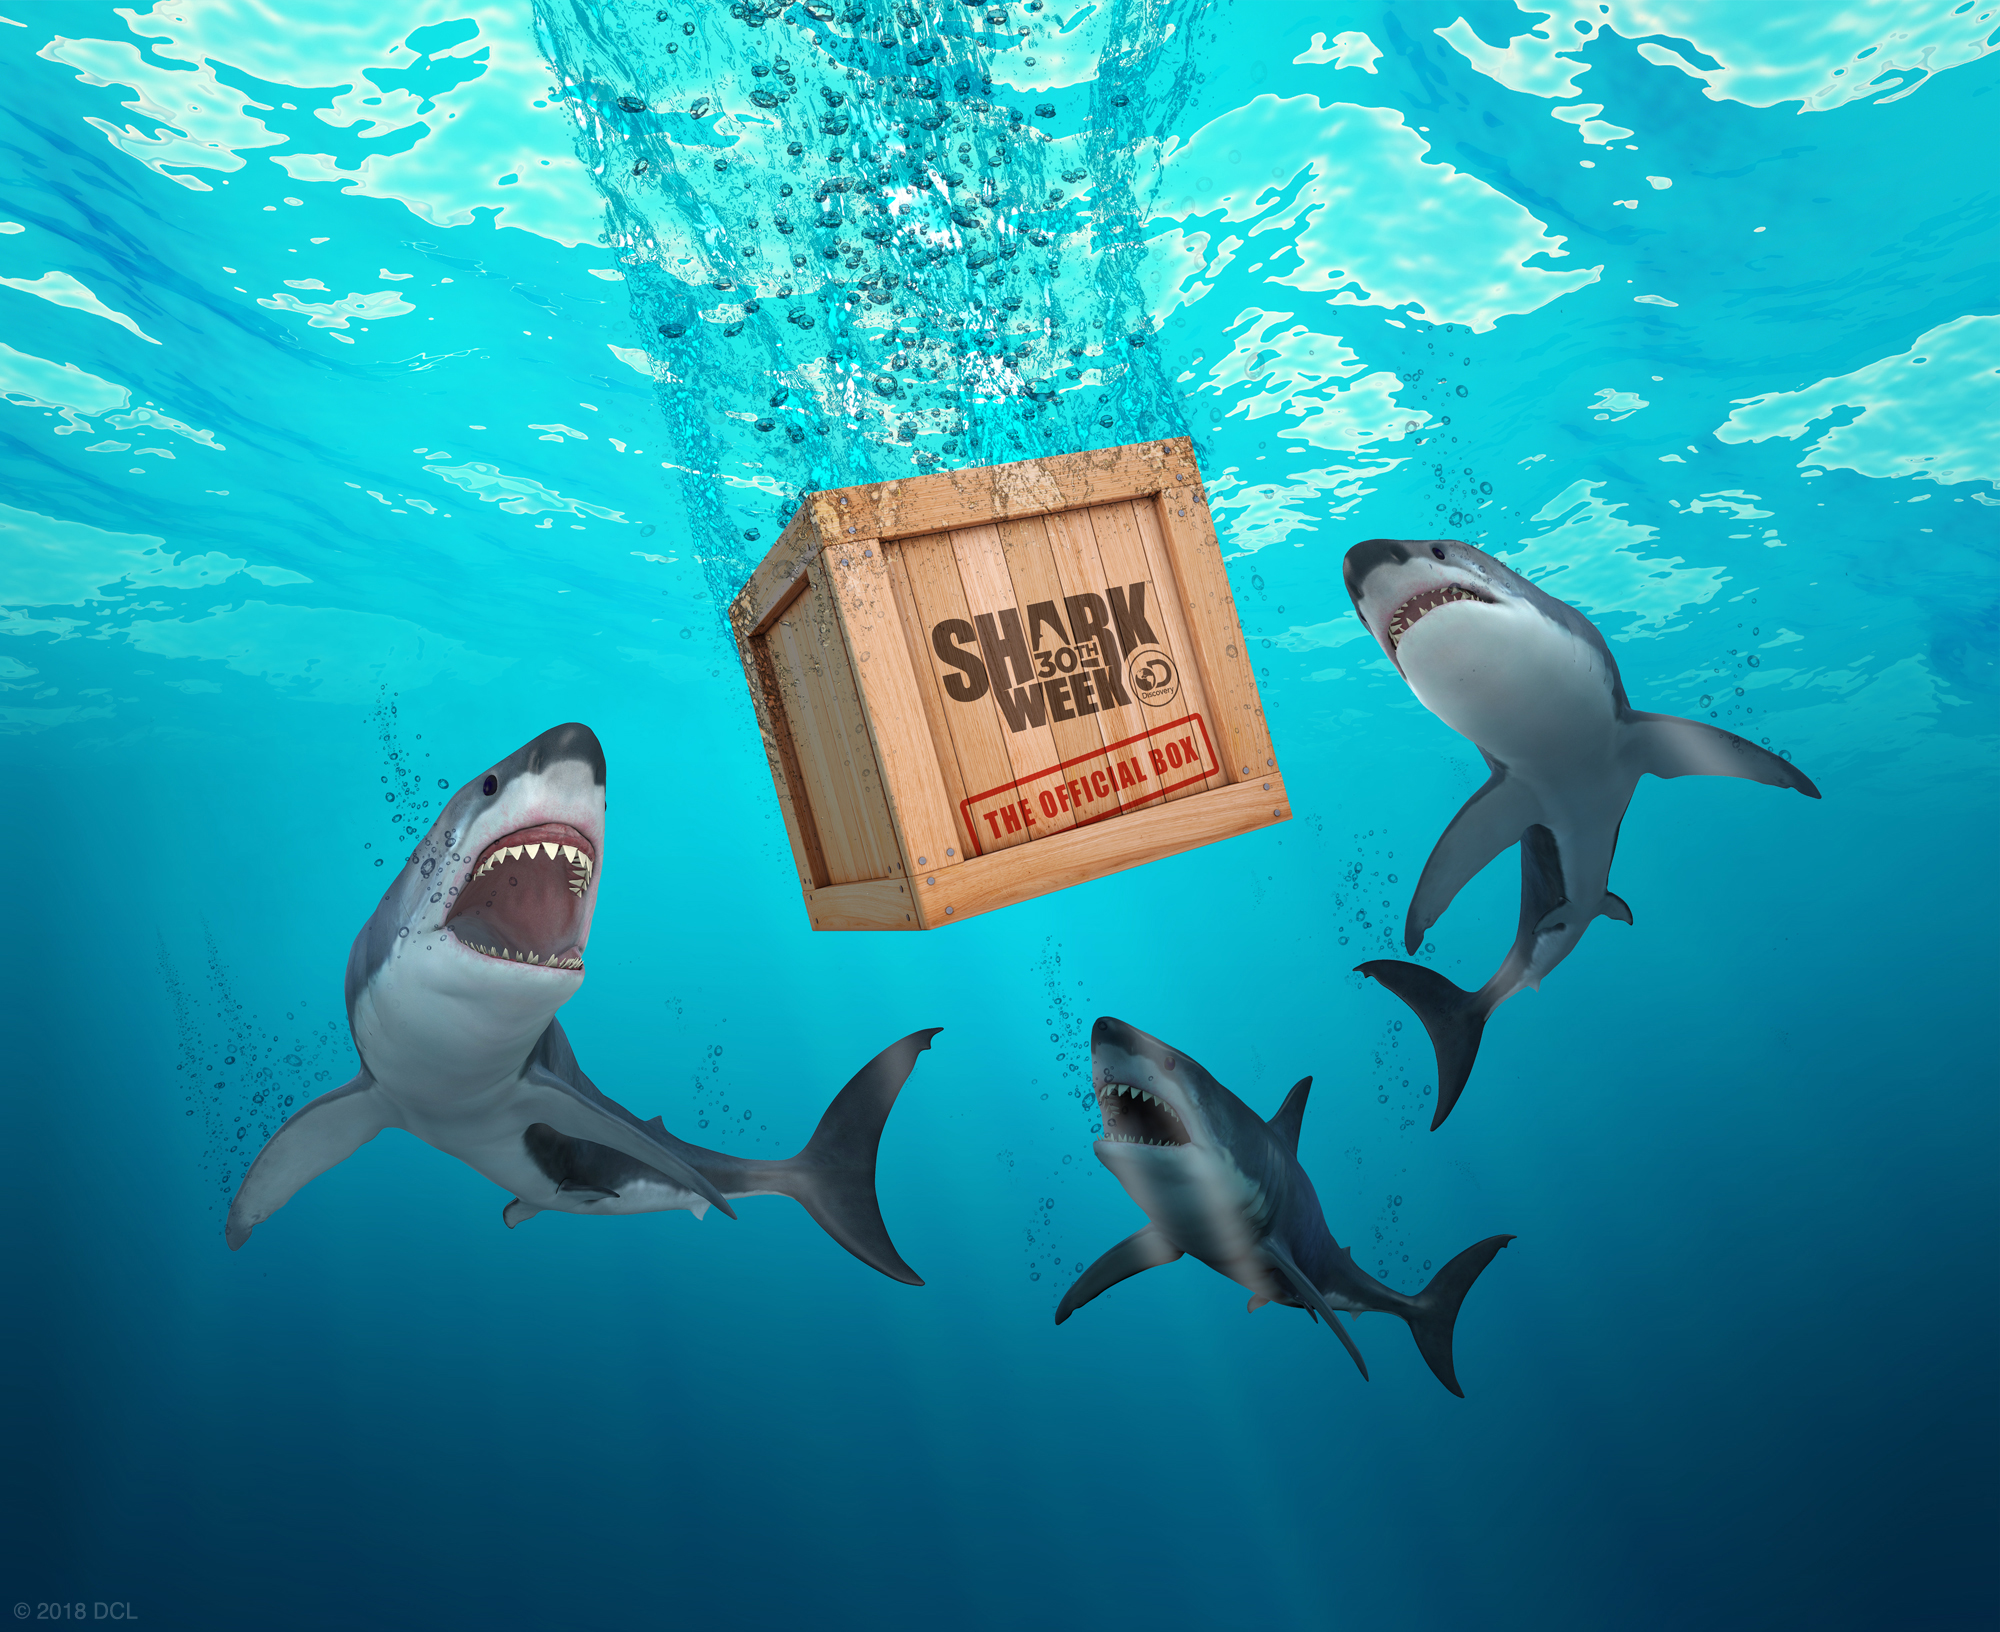 The Shark Week Box